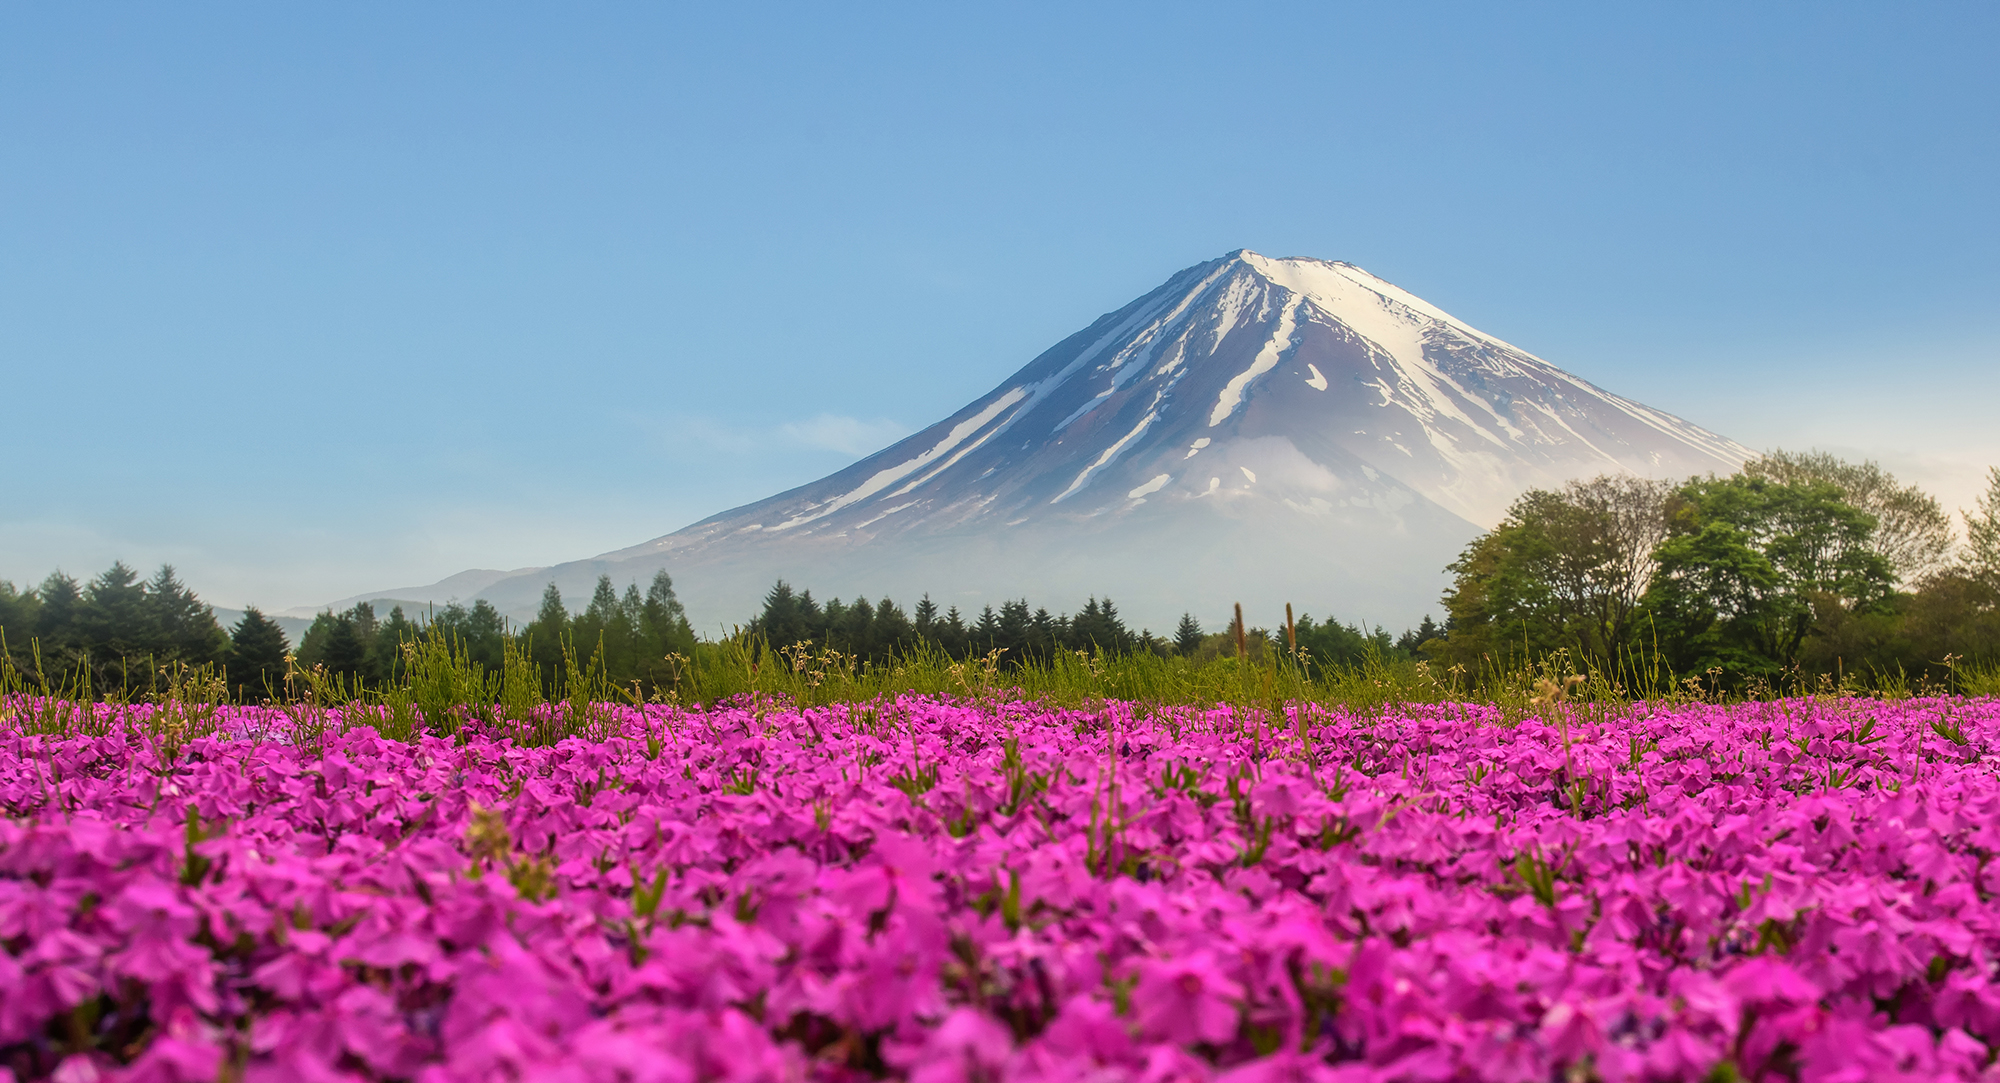 Pink Flower Field with Mount Fuji in Background by Korawee Ratchapakdee